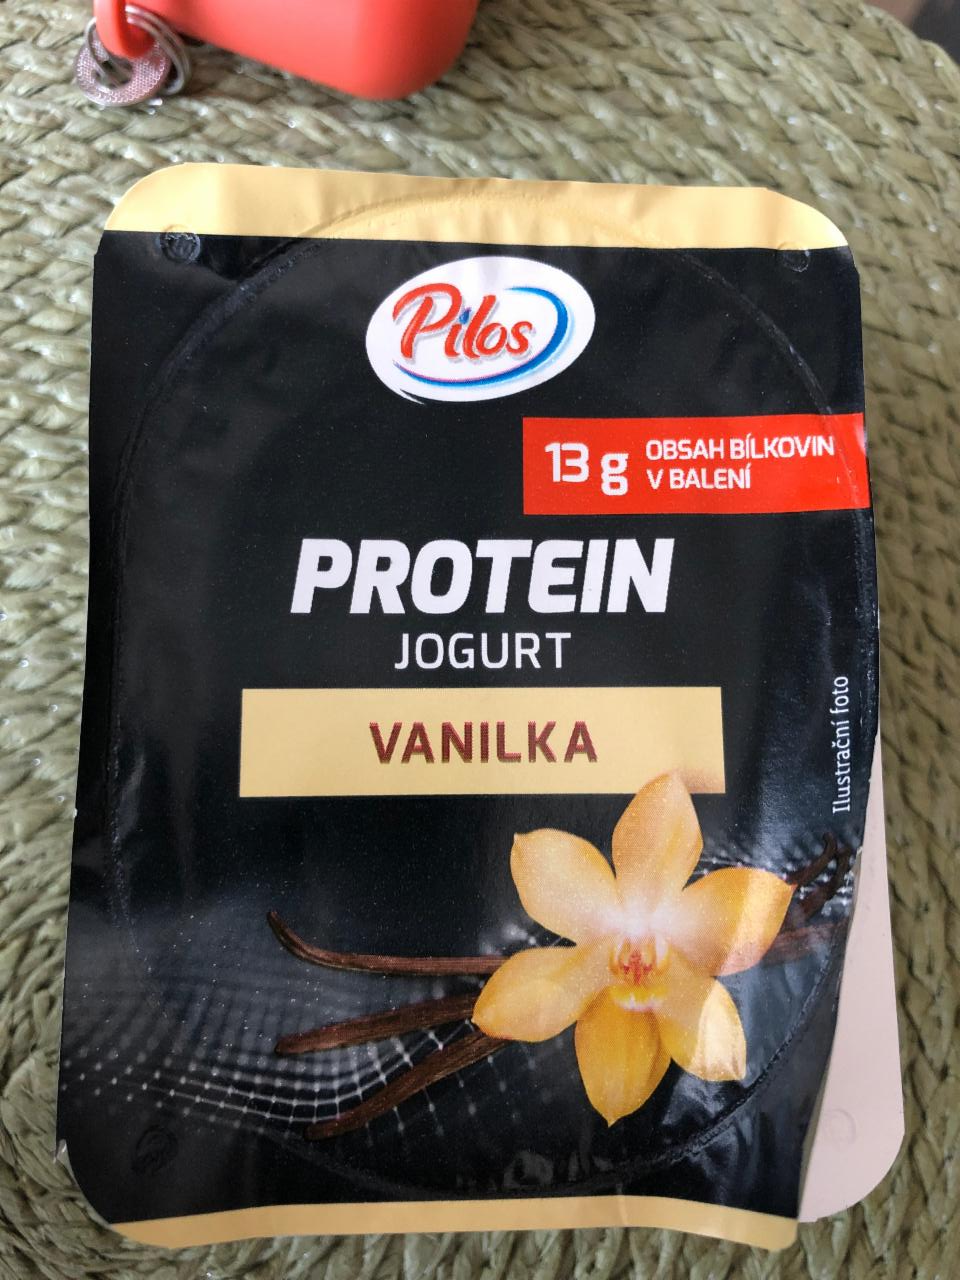 Фото - Йогурт протеїновий Protein Jogurt Vanilka Pilos